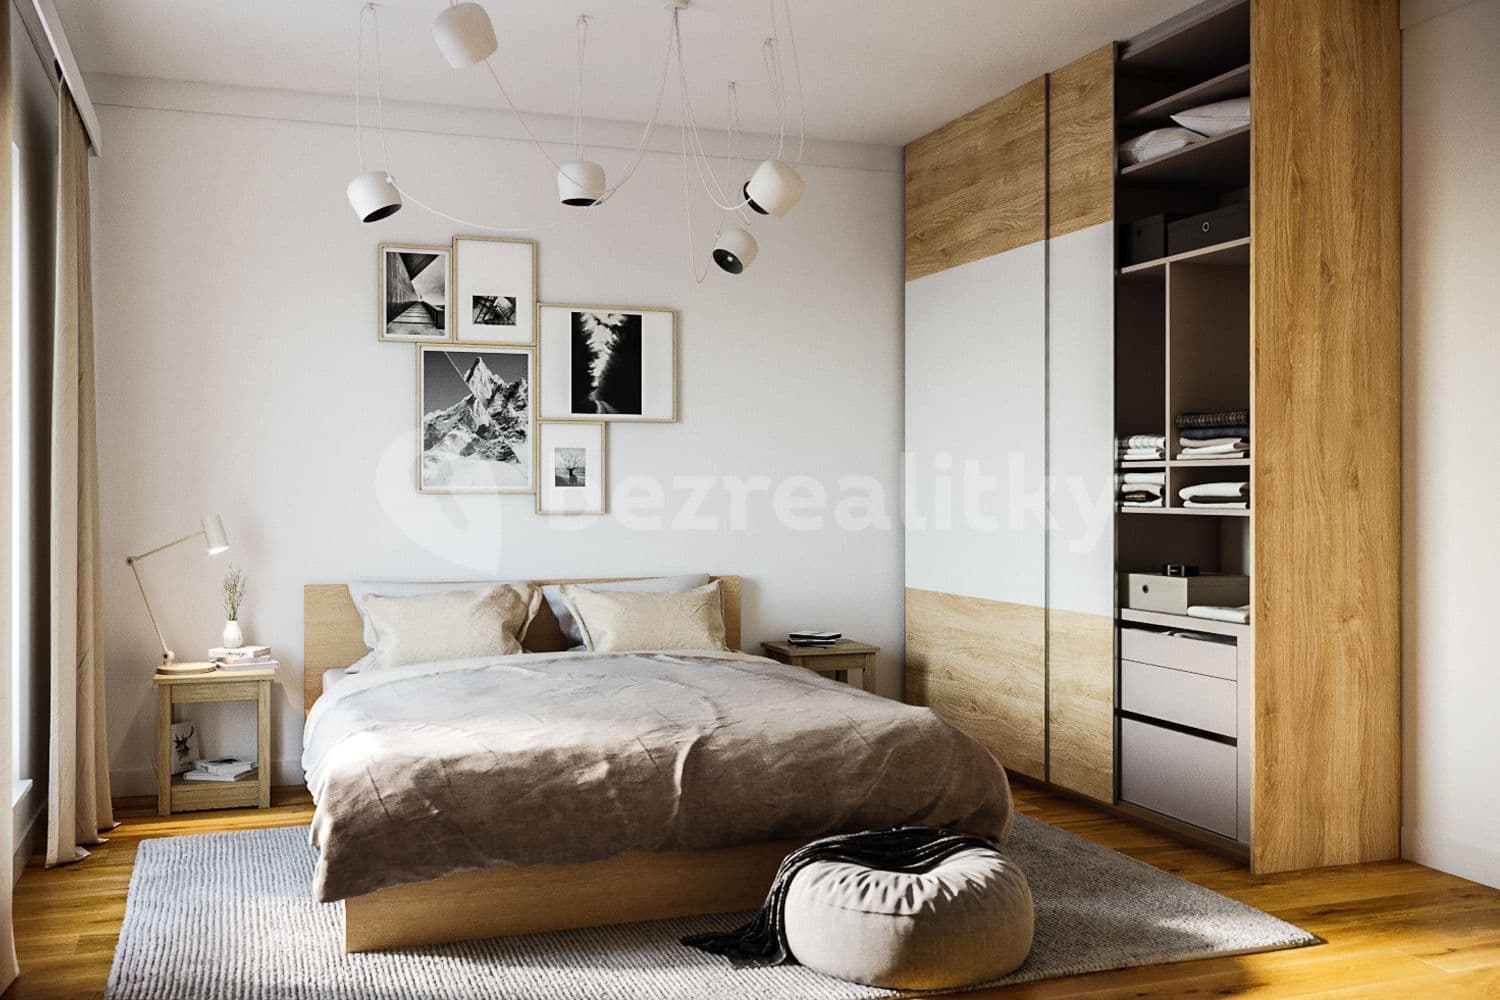 1 bedroom with open-plan kitchen flat for sale, 84 m², U Konečné, Prague, Prague